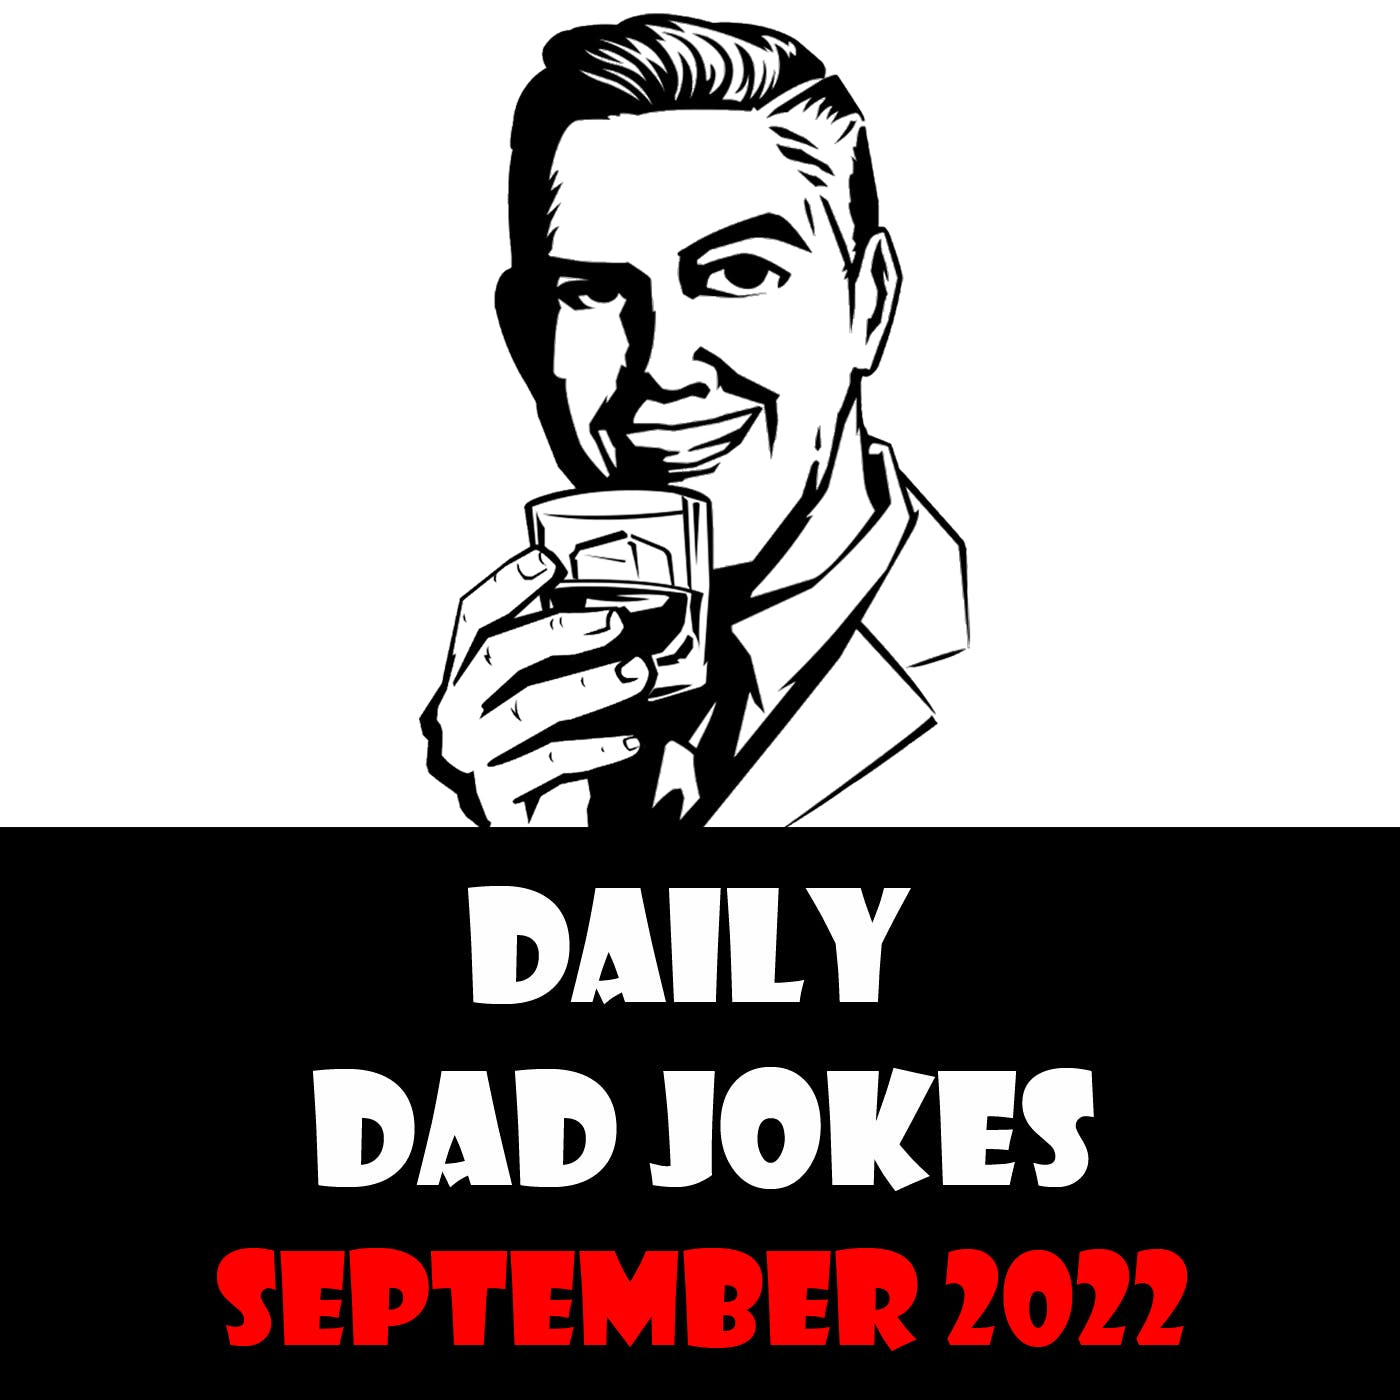 Top 10 Dad Jokes for September 2022!